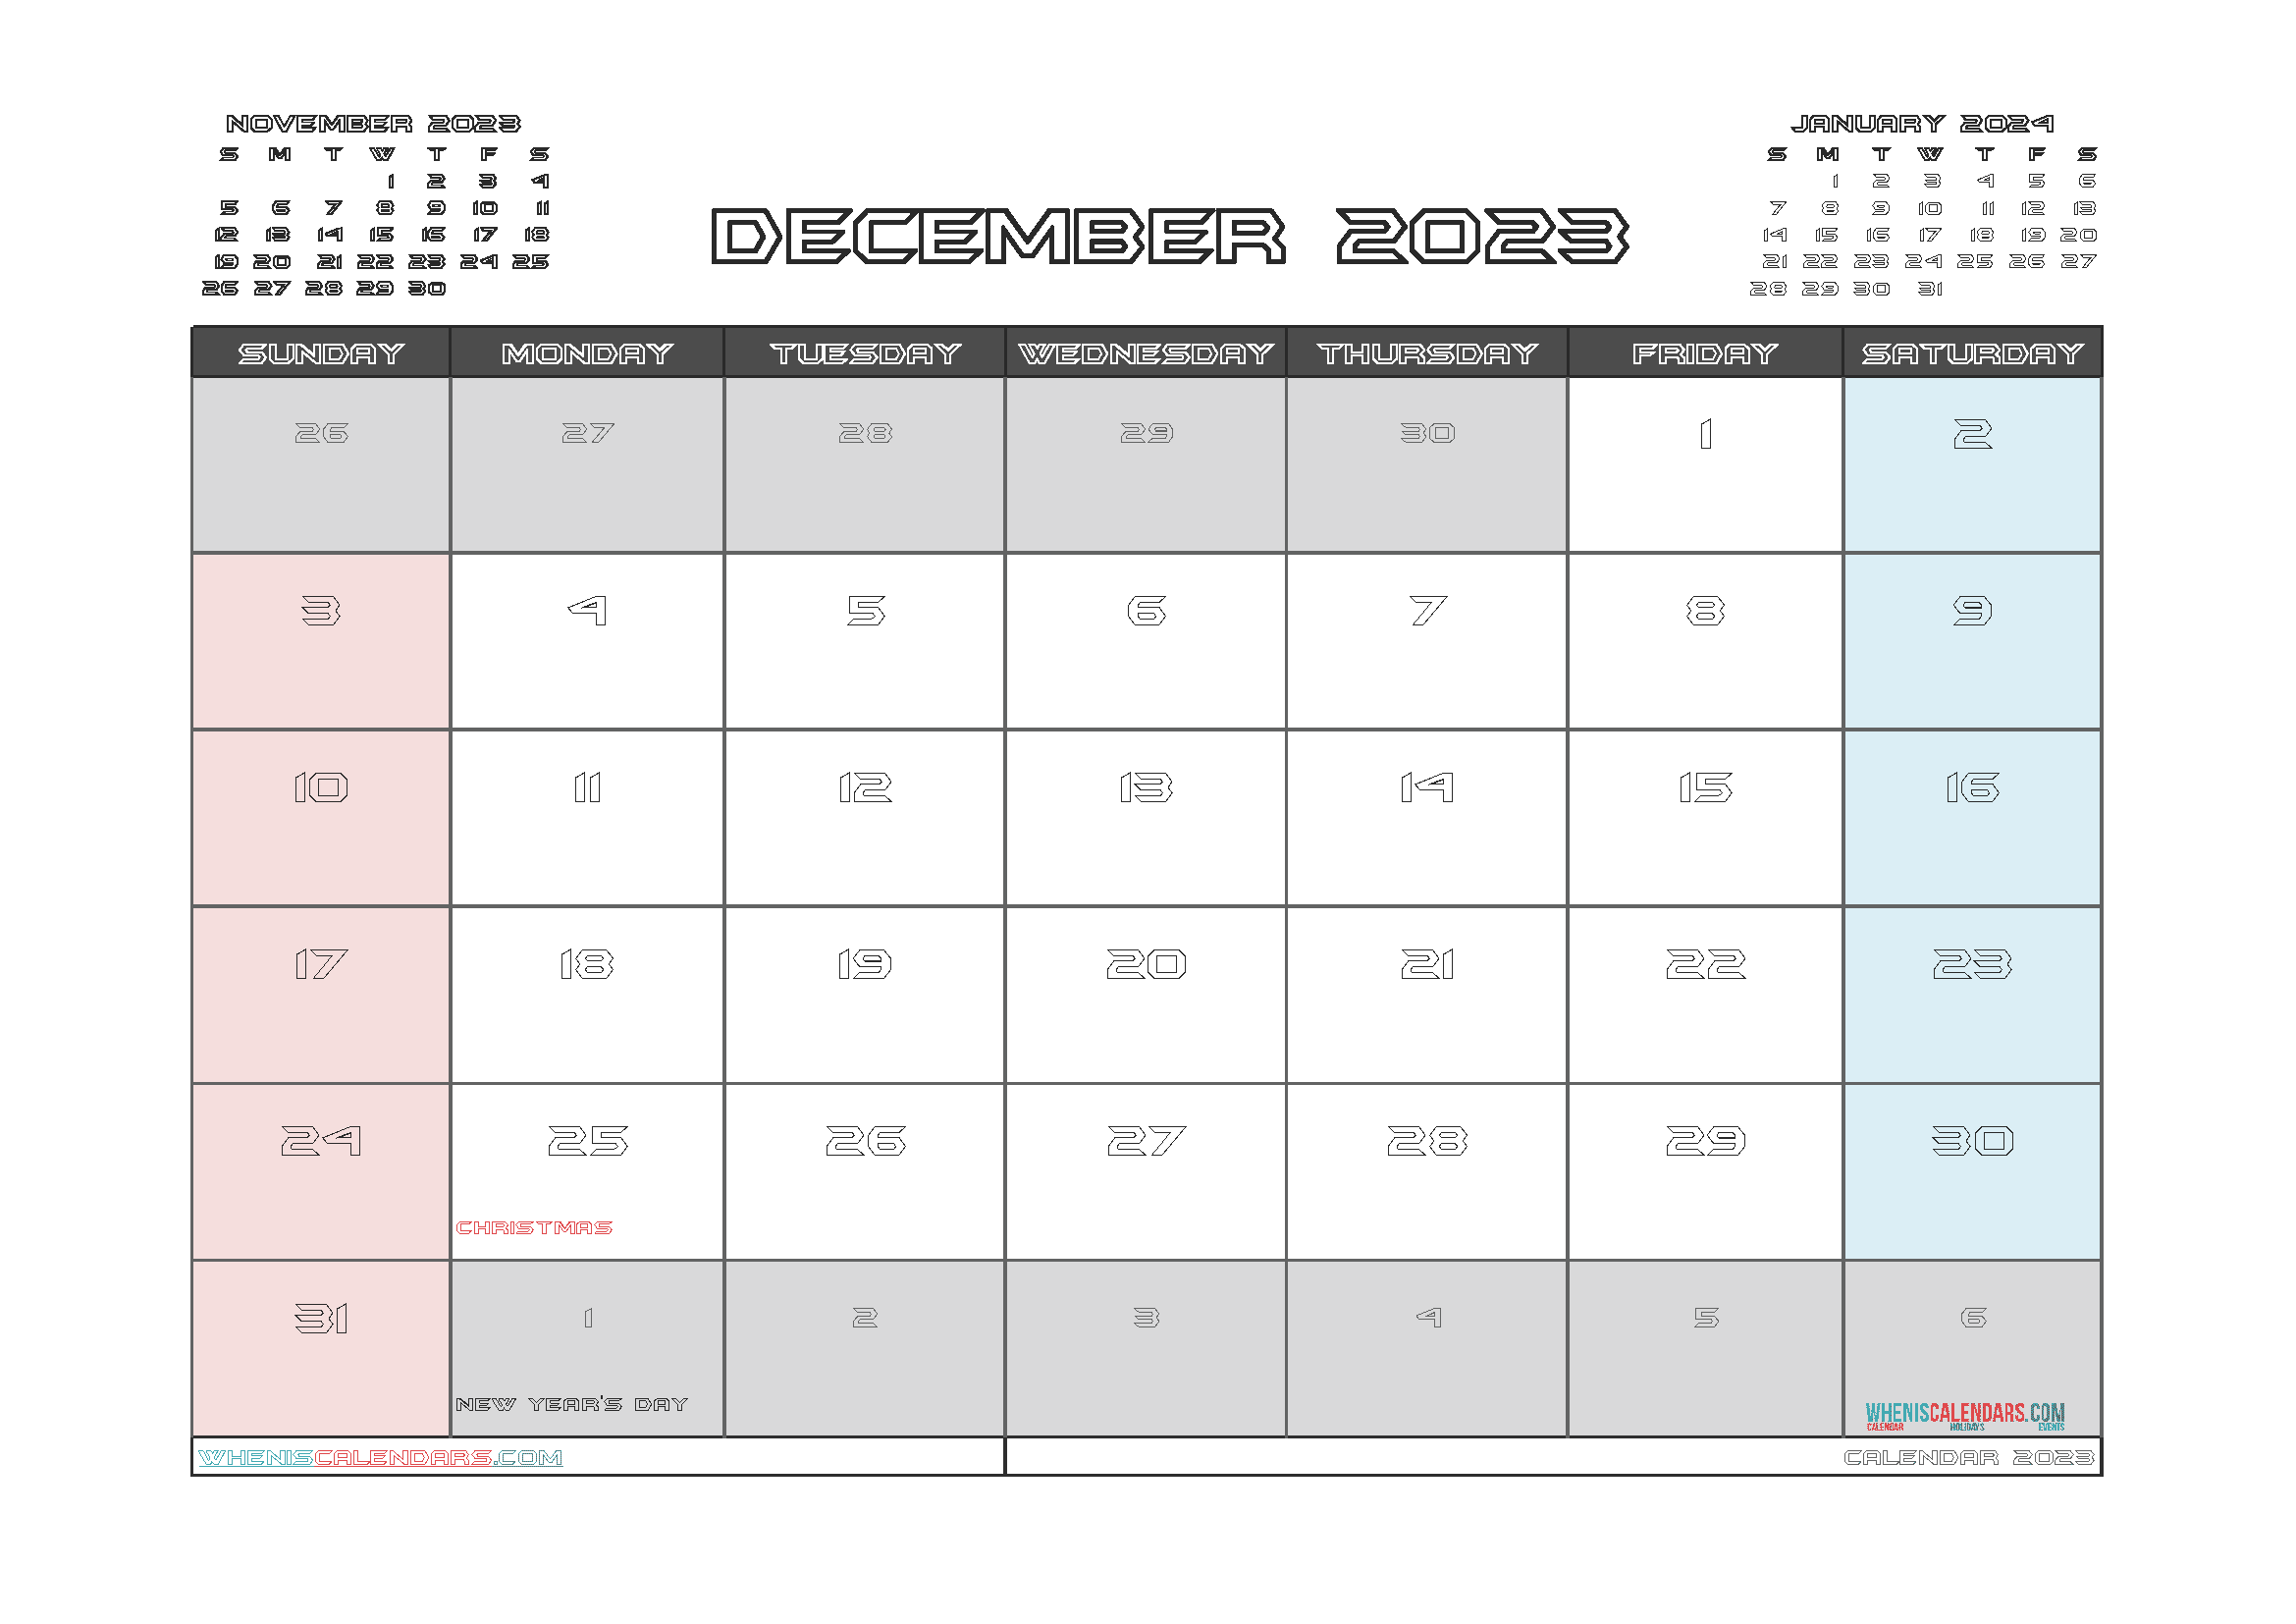 Free Calendar December 2023 with Holidays Printable PDF in Landscape